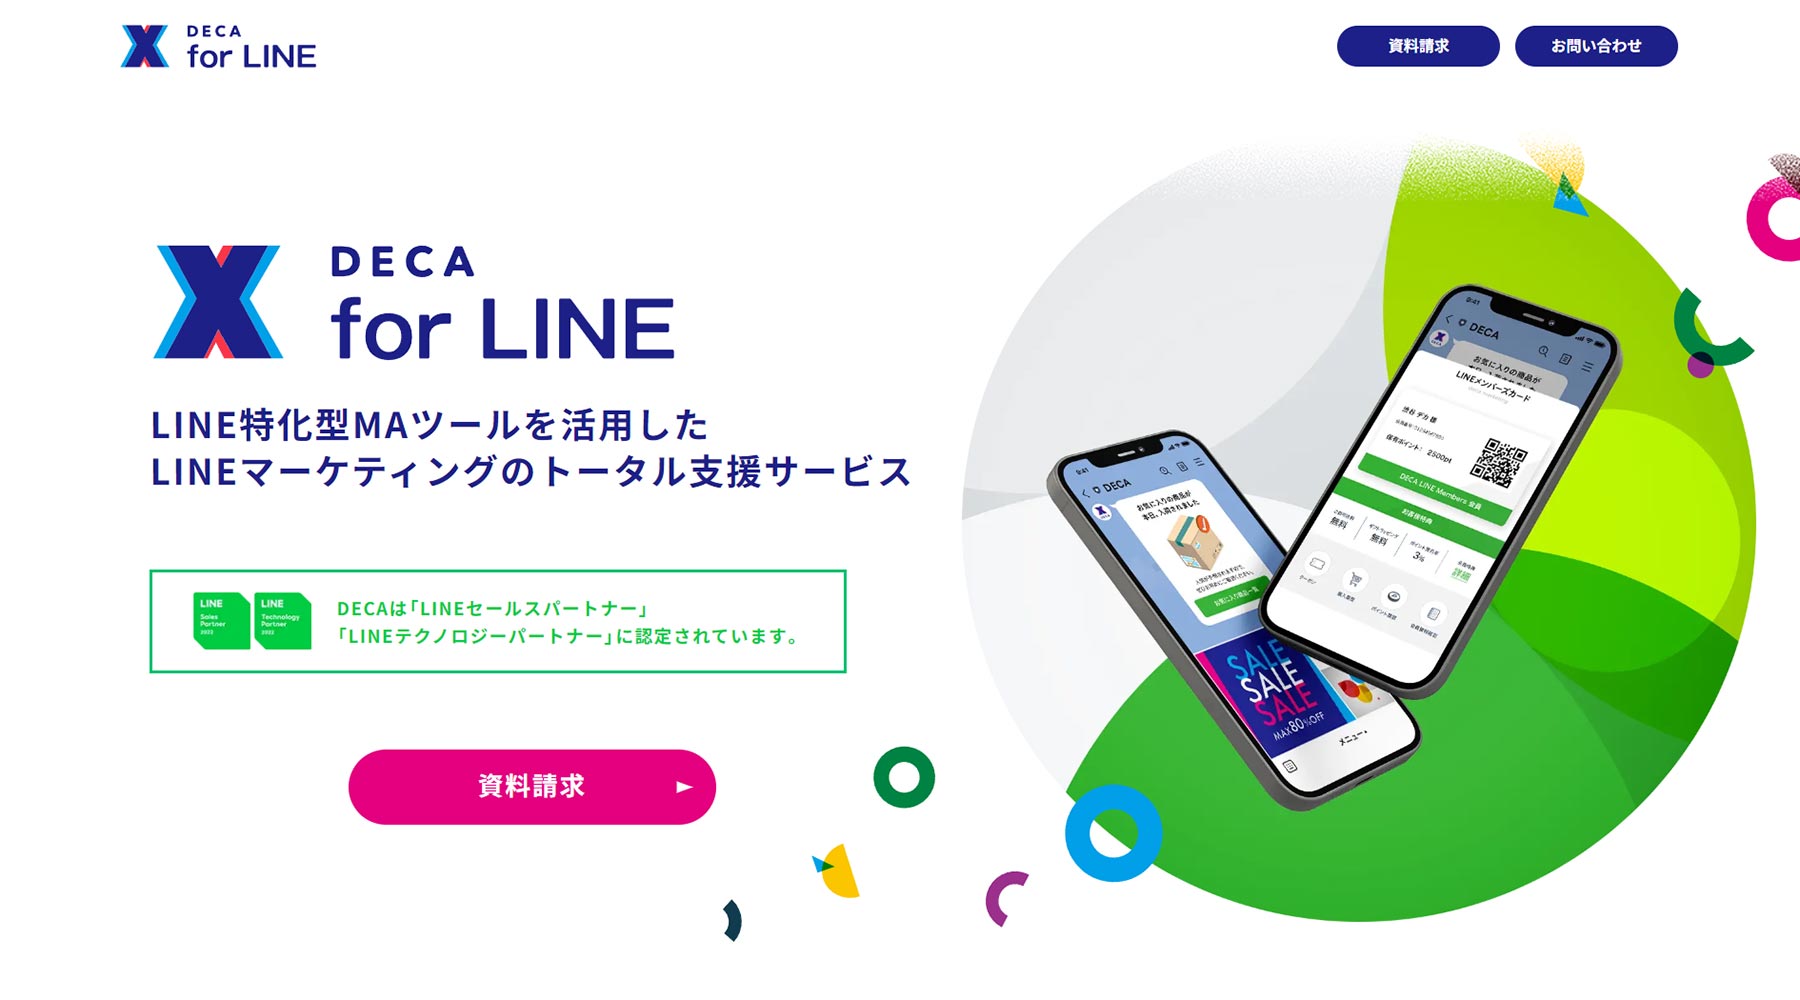 DECA for LINE_公式Webサイト